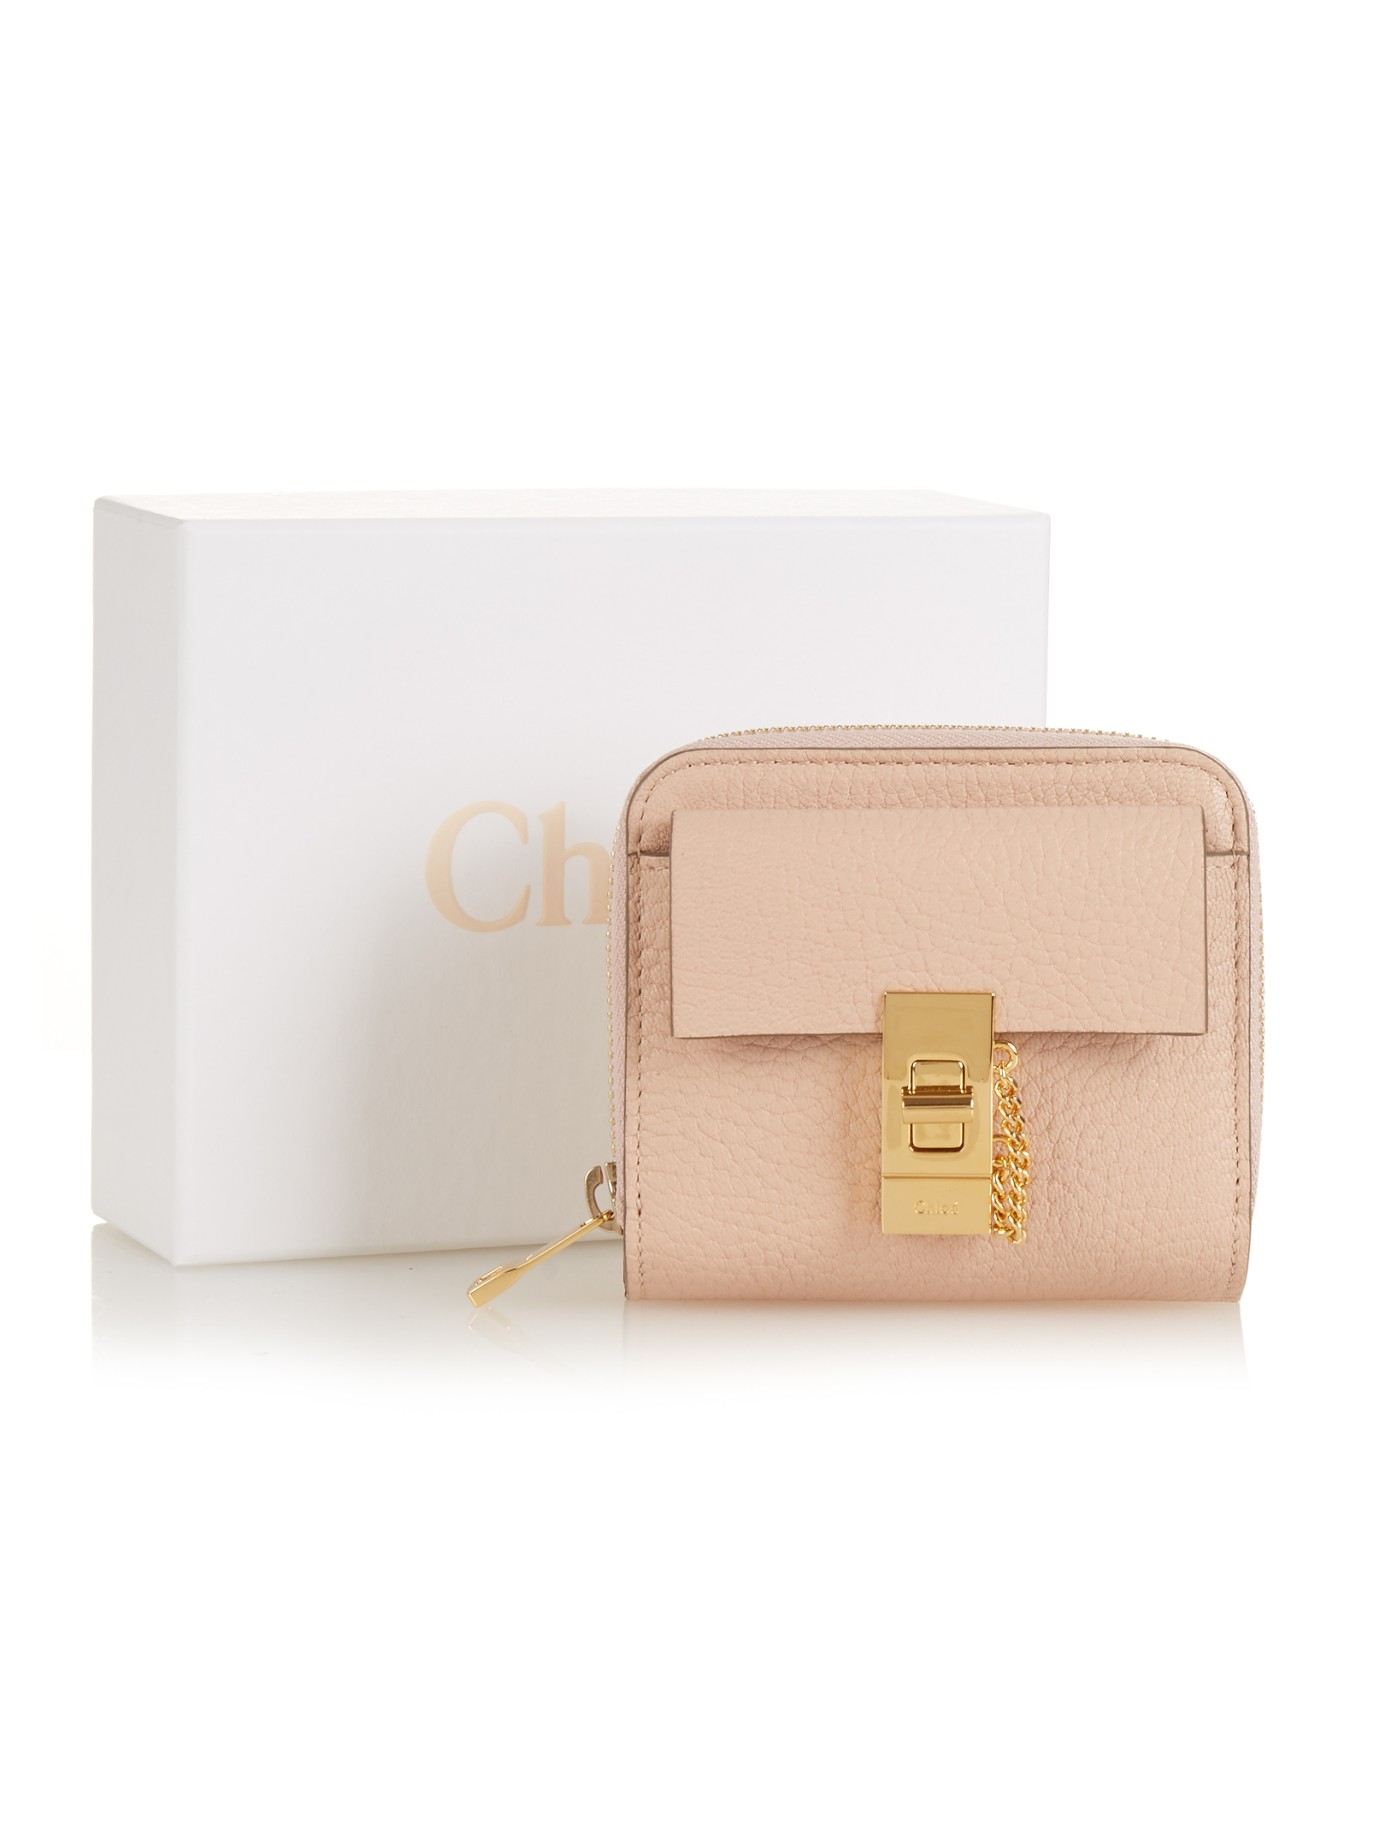 Chloe Drew Grained Leather Wallet In Light Pink Pink Lyst